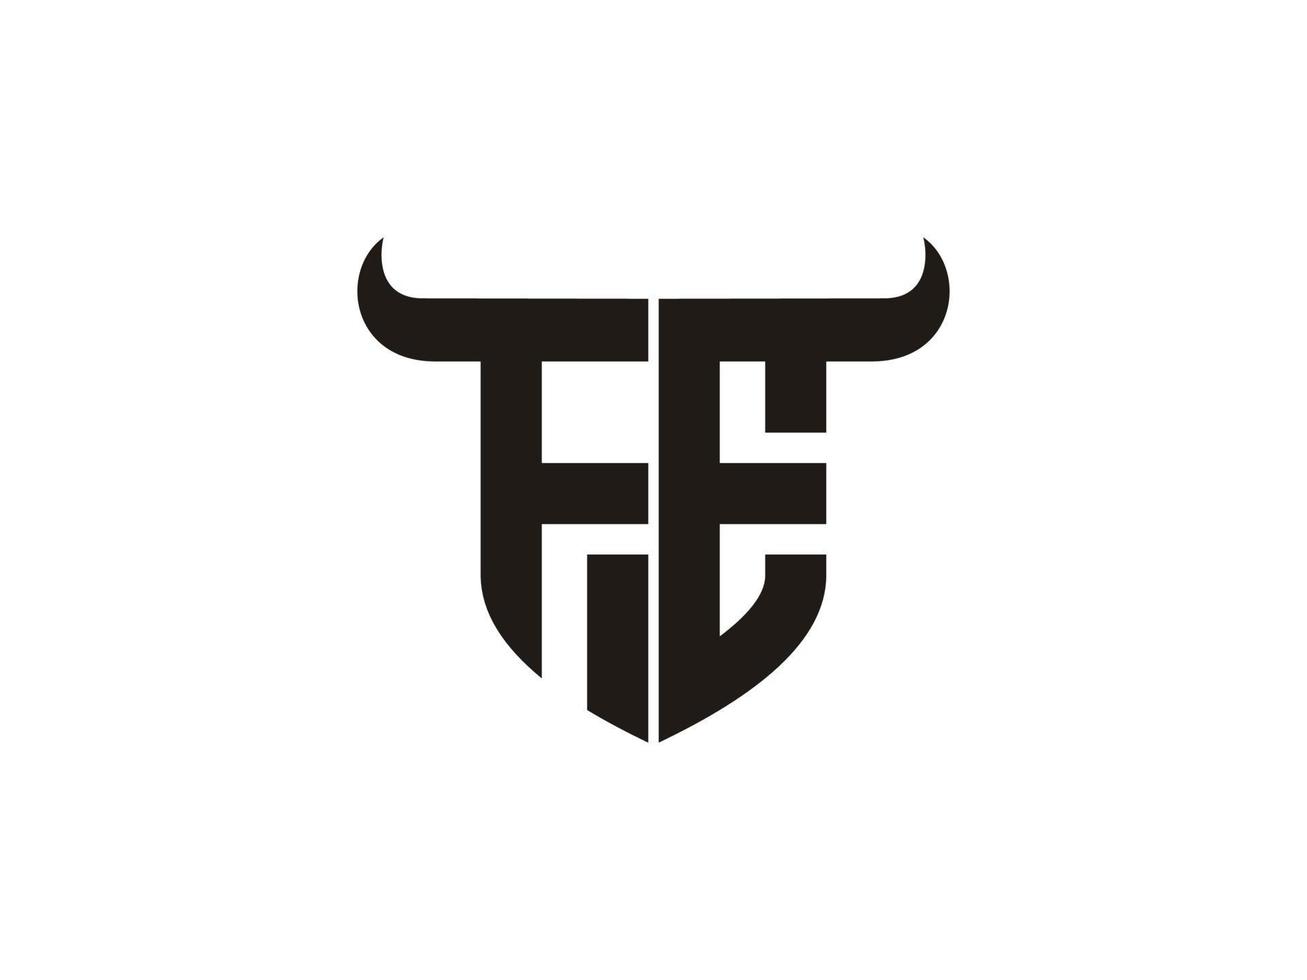 diseño inicial del logo del toro fe. vector